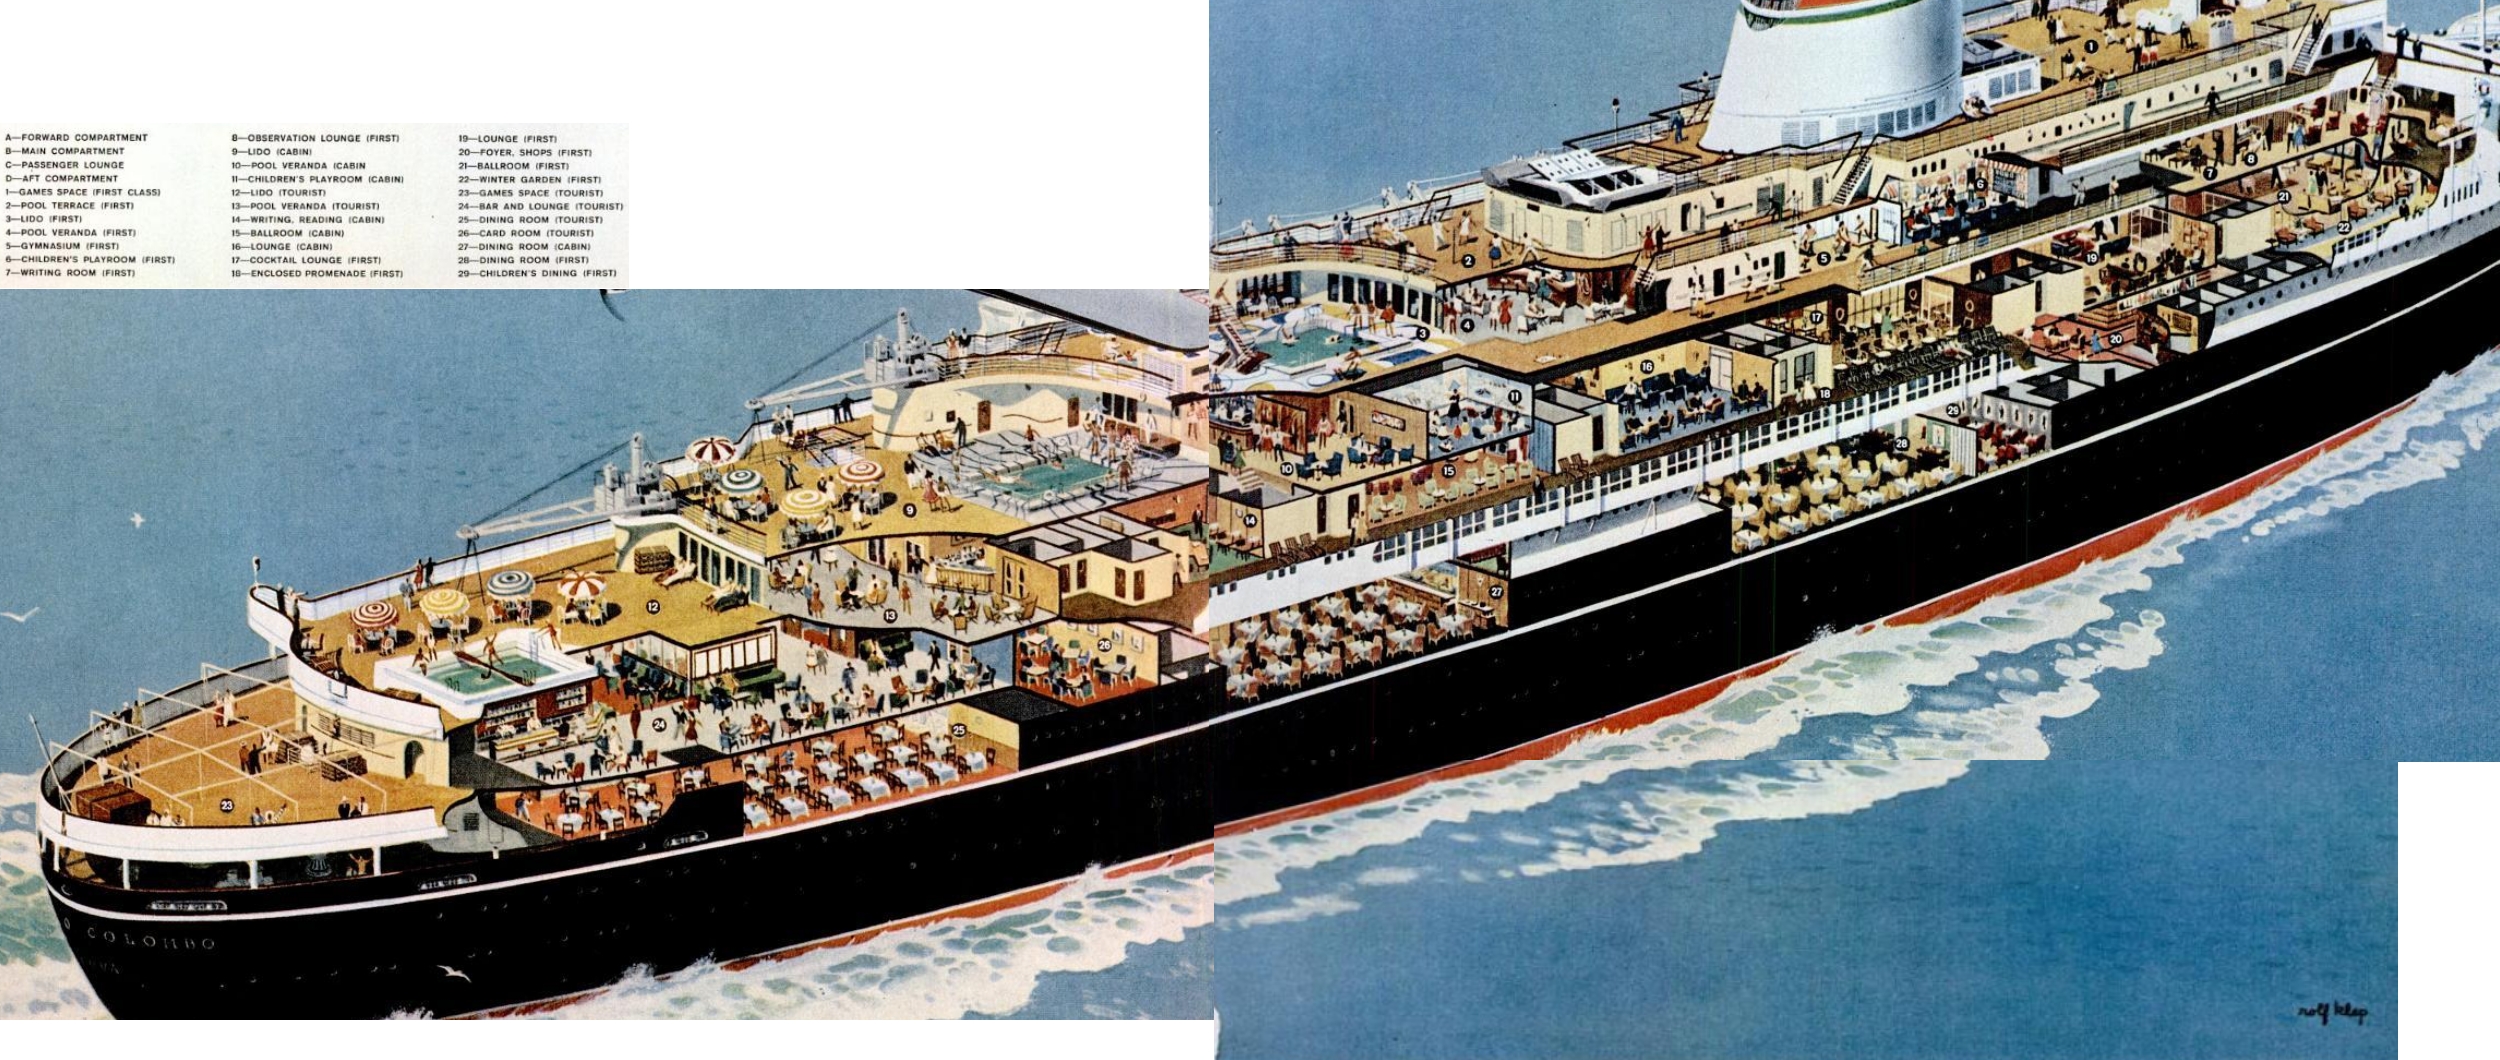 Oceanliner Cristoforo Columbo Cutaway, 1955